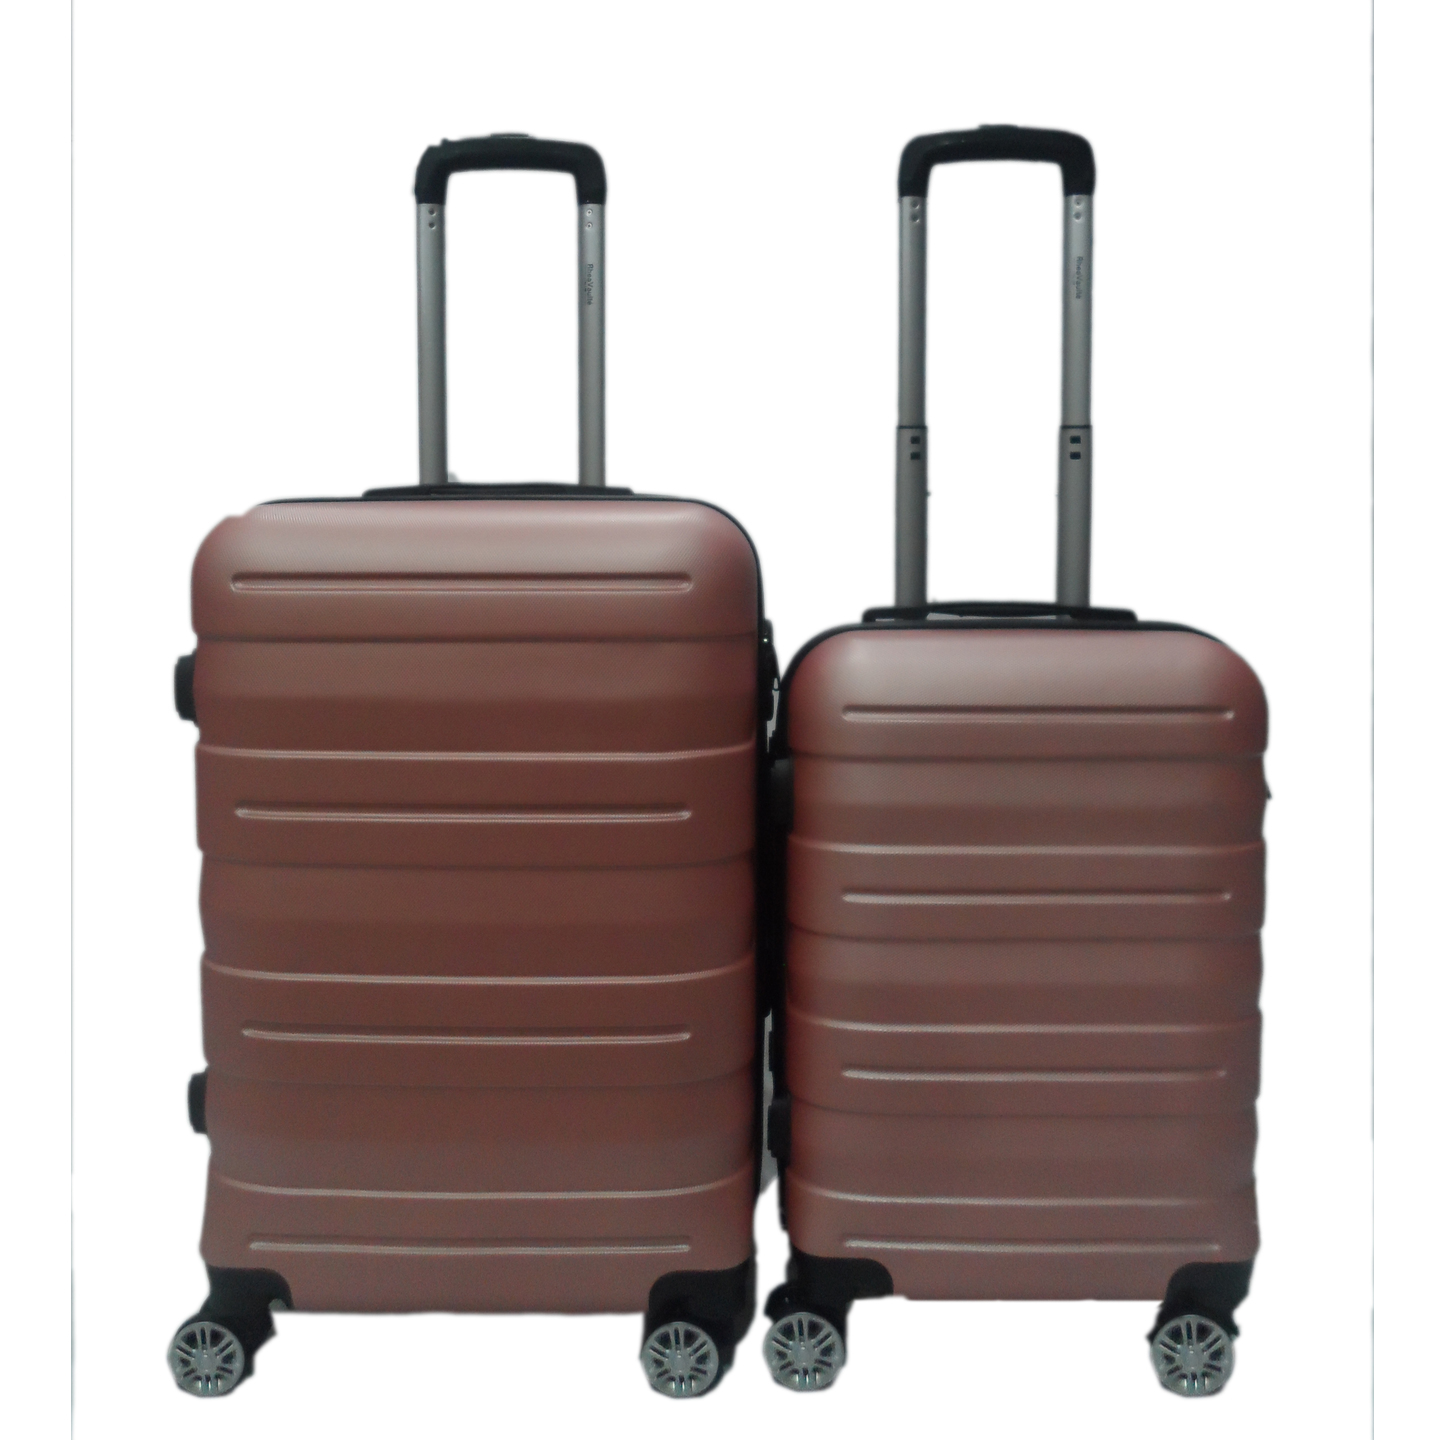 RV-131 Elegant Hard Box Luggage - Rose Gold 20 inch and 24 inch